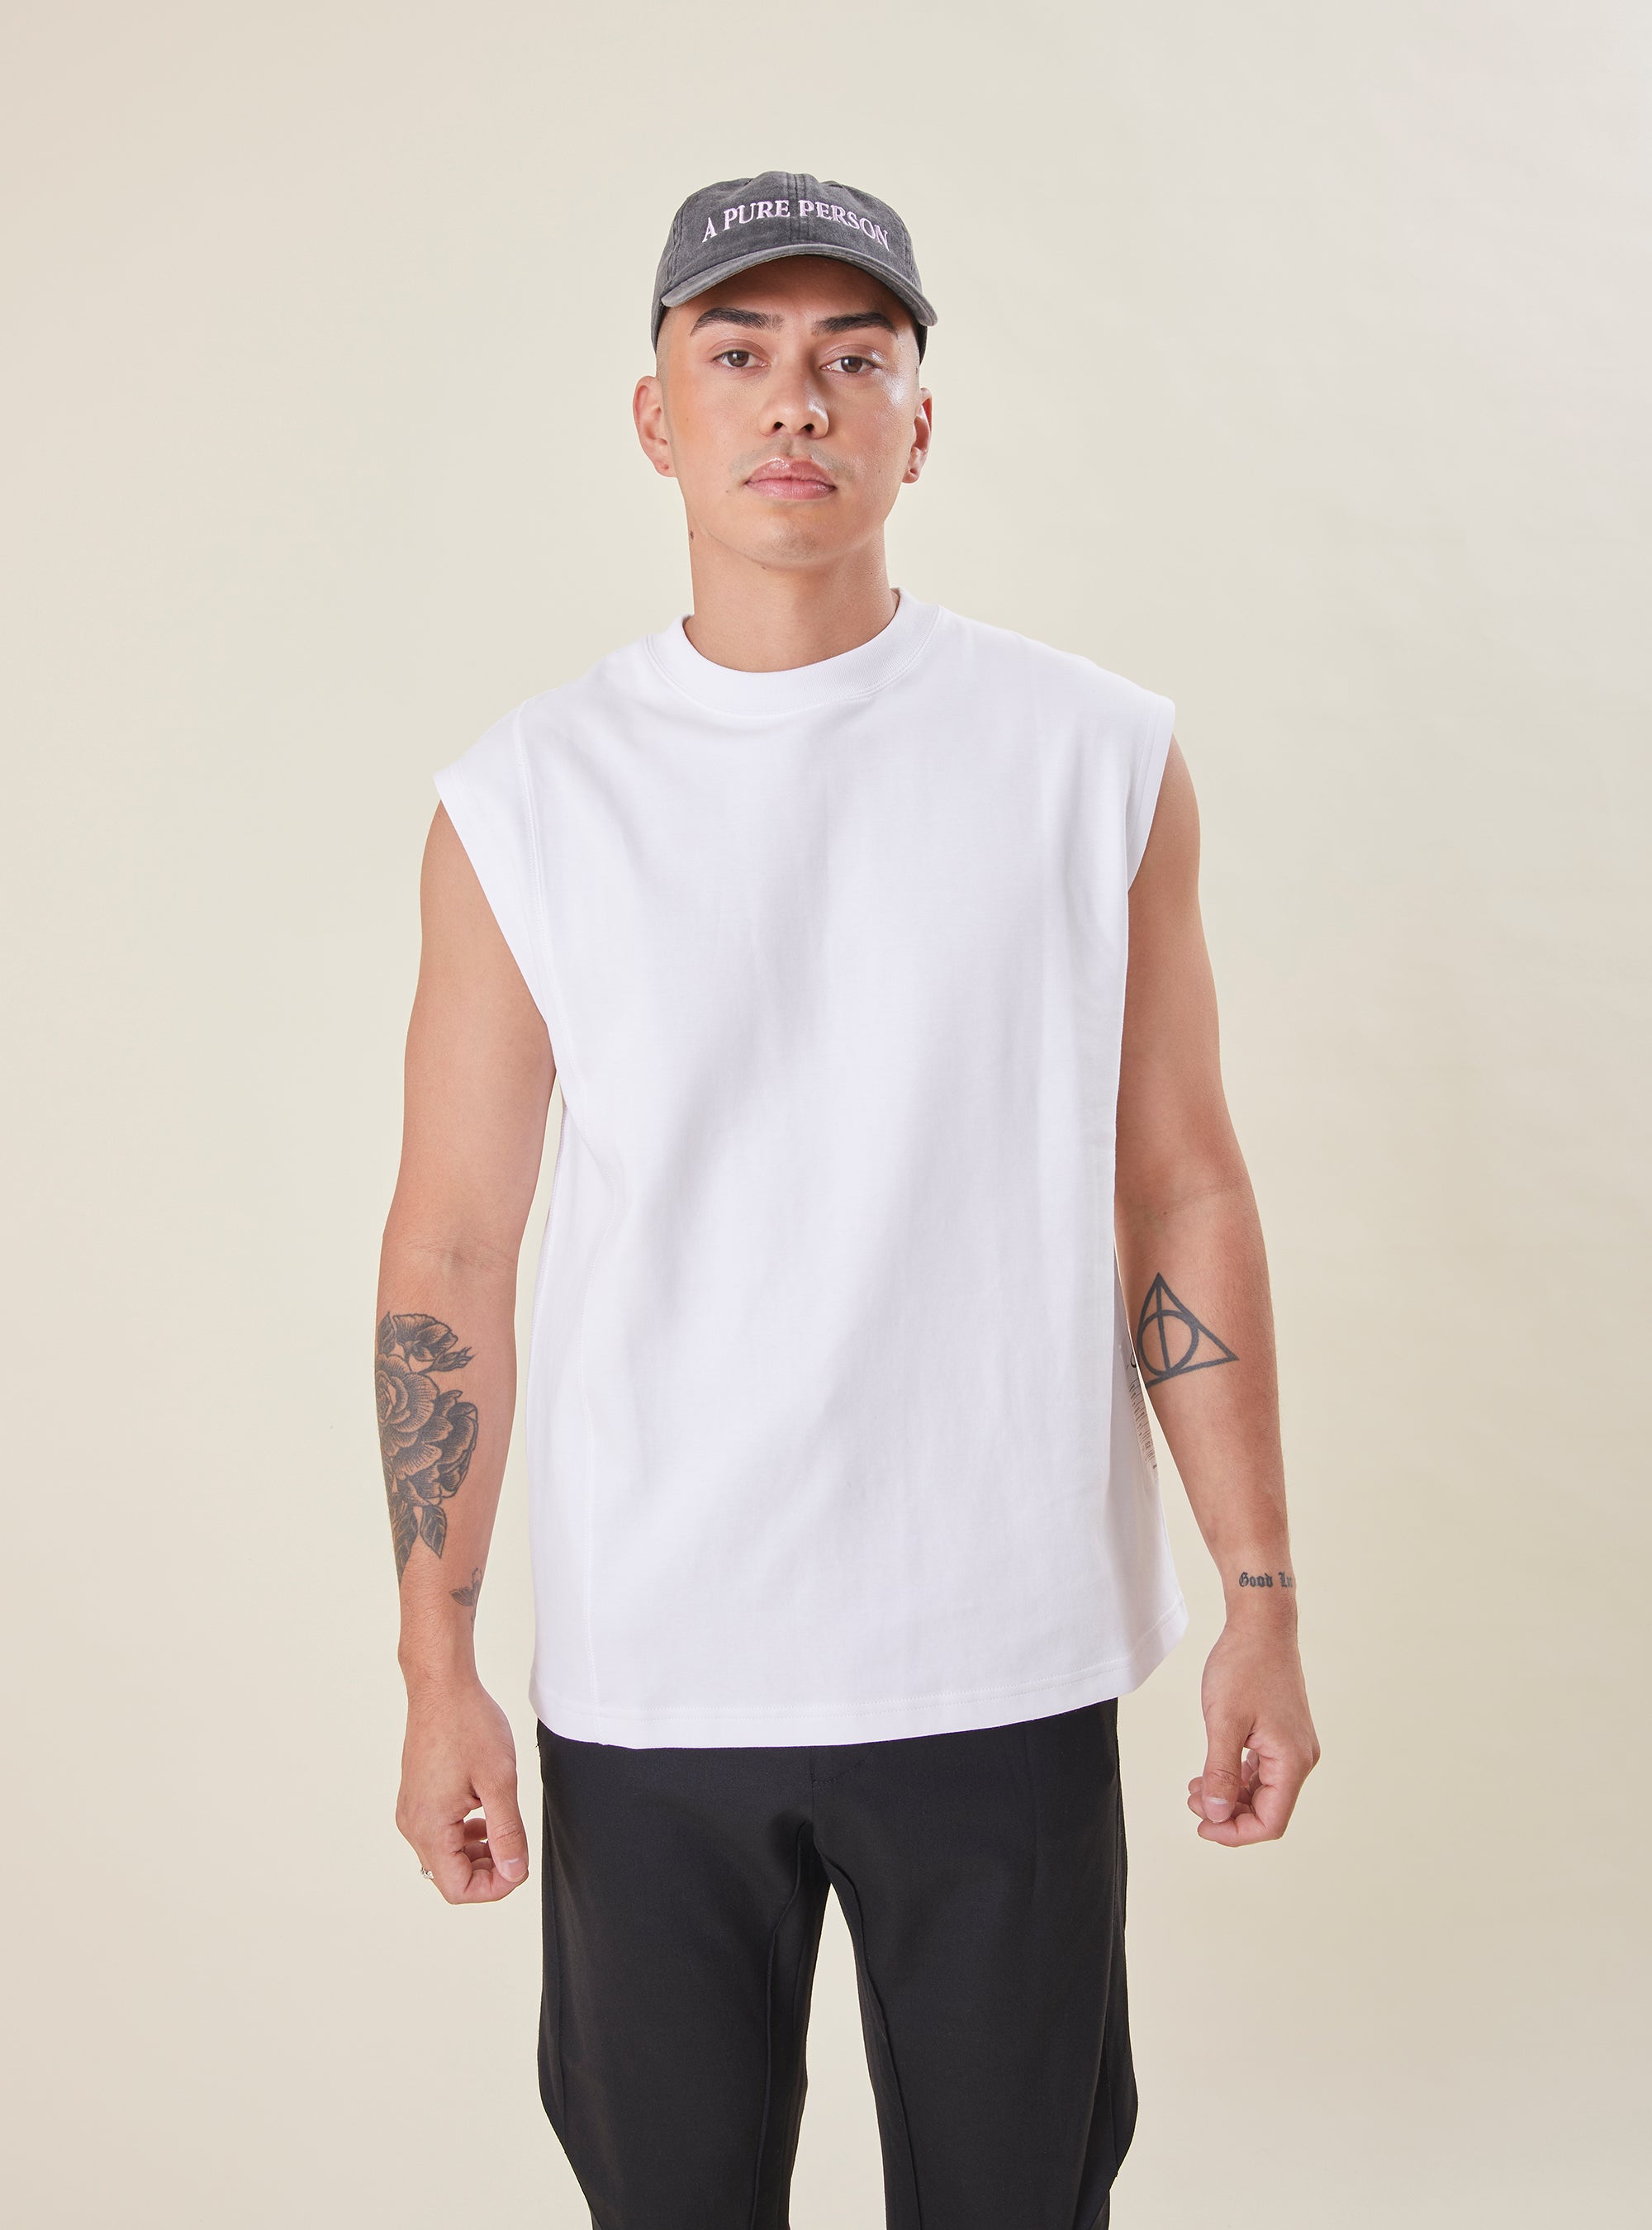 Grosports Cotton Spandex Blend Invoice Sleeveless T-Shirt